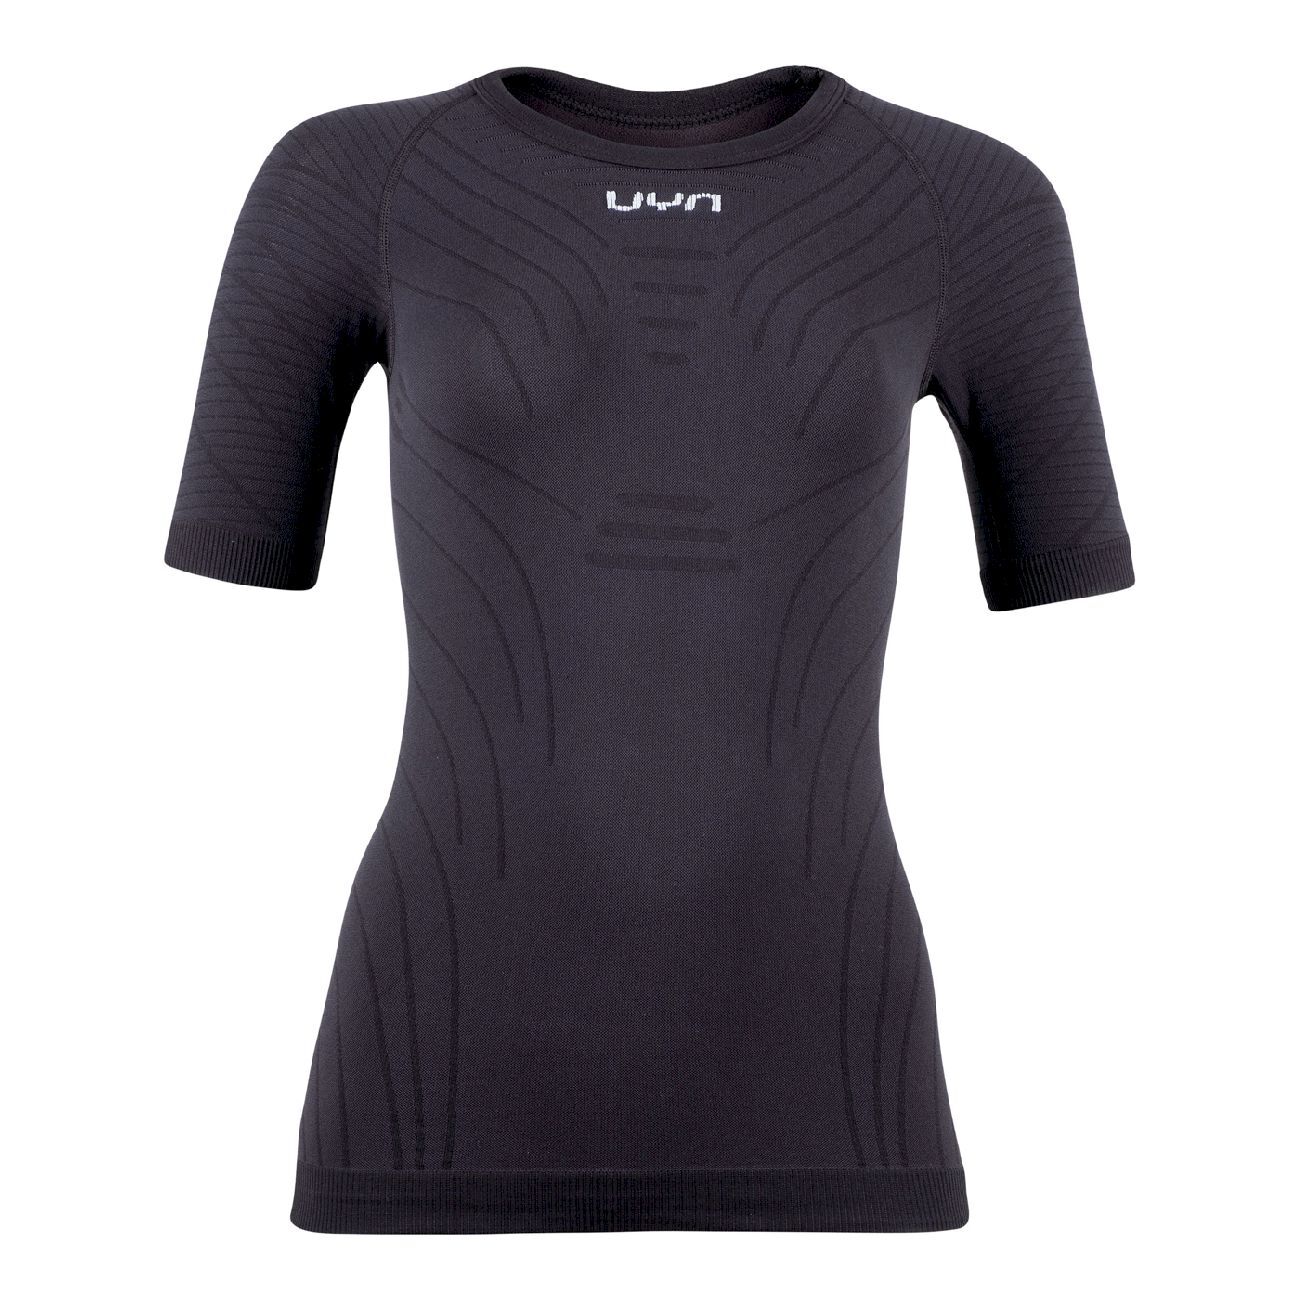 Uyn Motyon 2.0 UW Shirt Short SL - Base layer - Women's